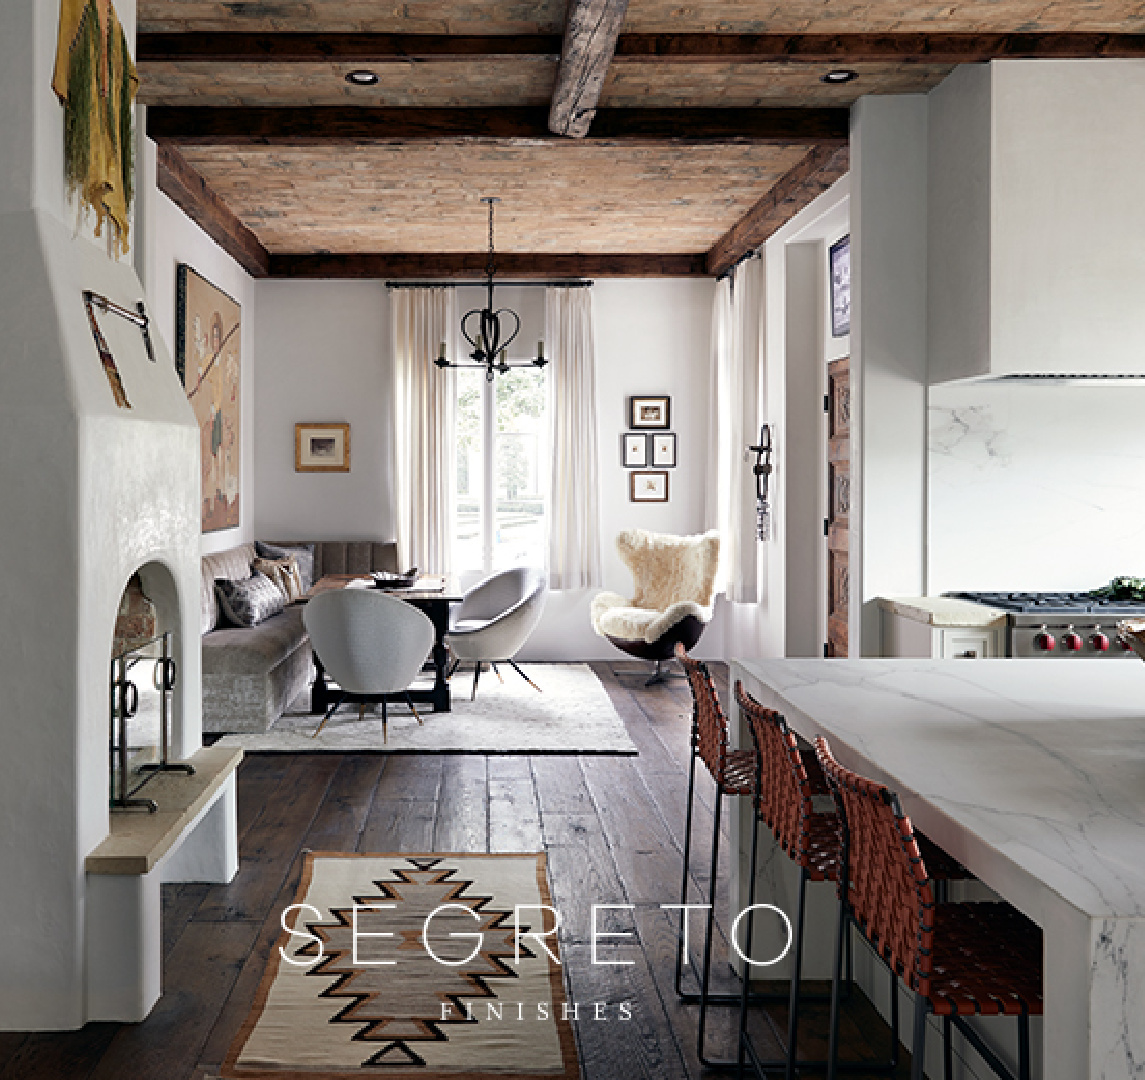 Segreto Finishes transformed a beautiful Spanish style home.